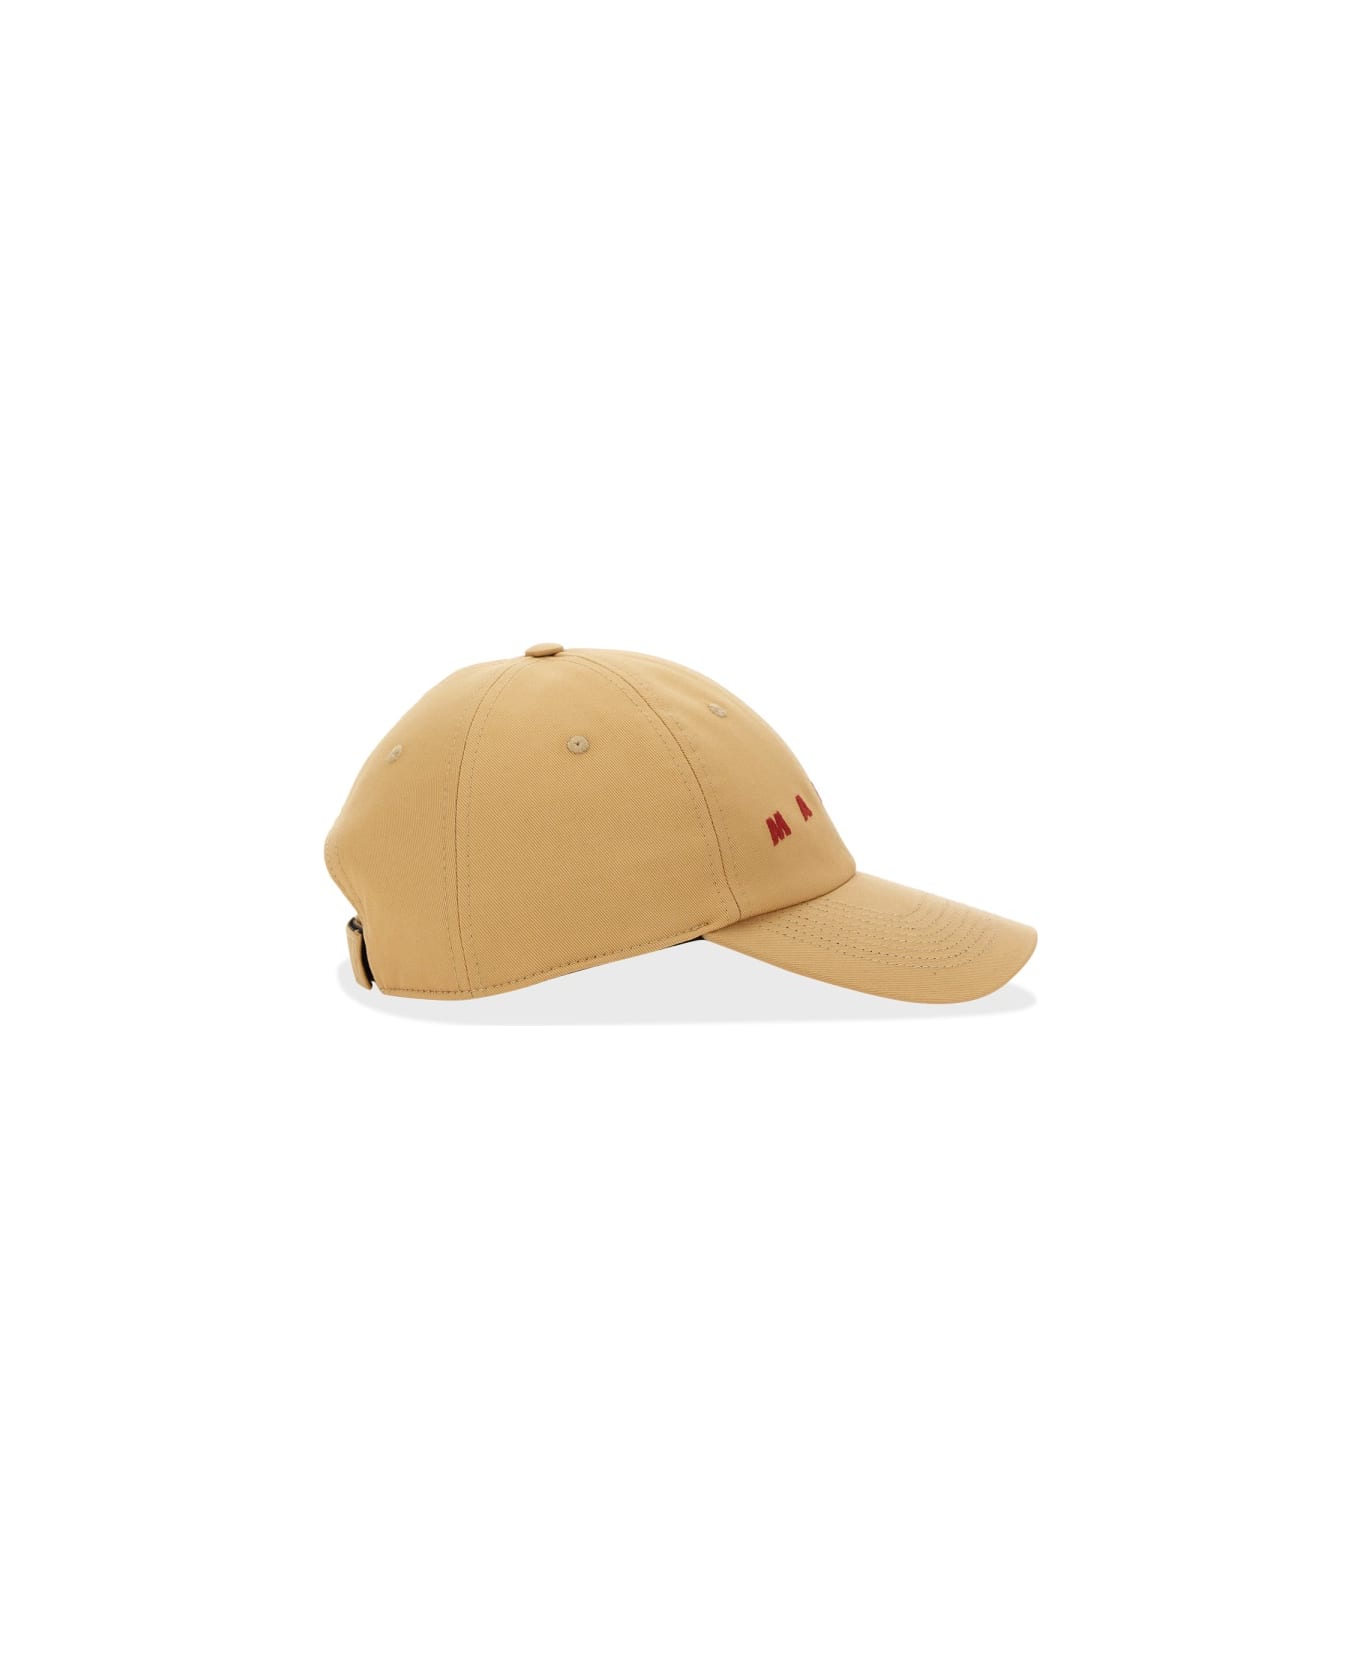 Marni Baseball Hat With Logo - BEIGE